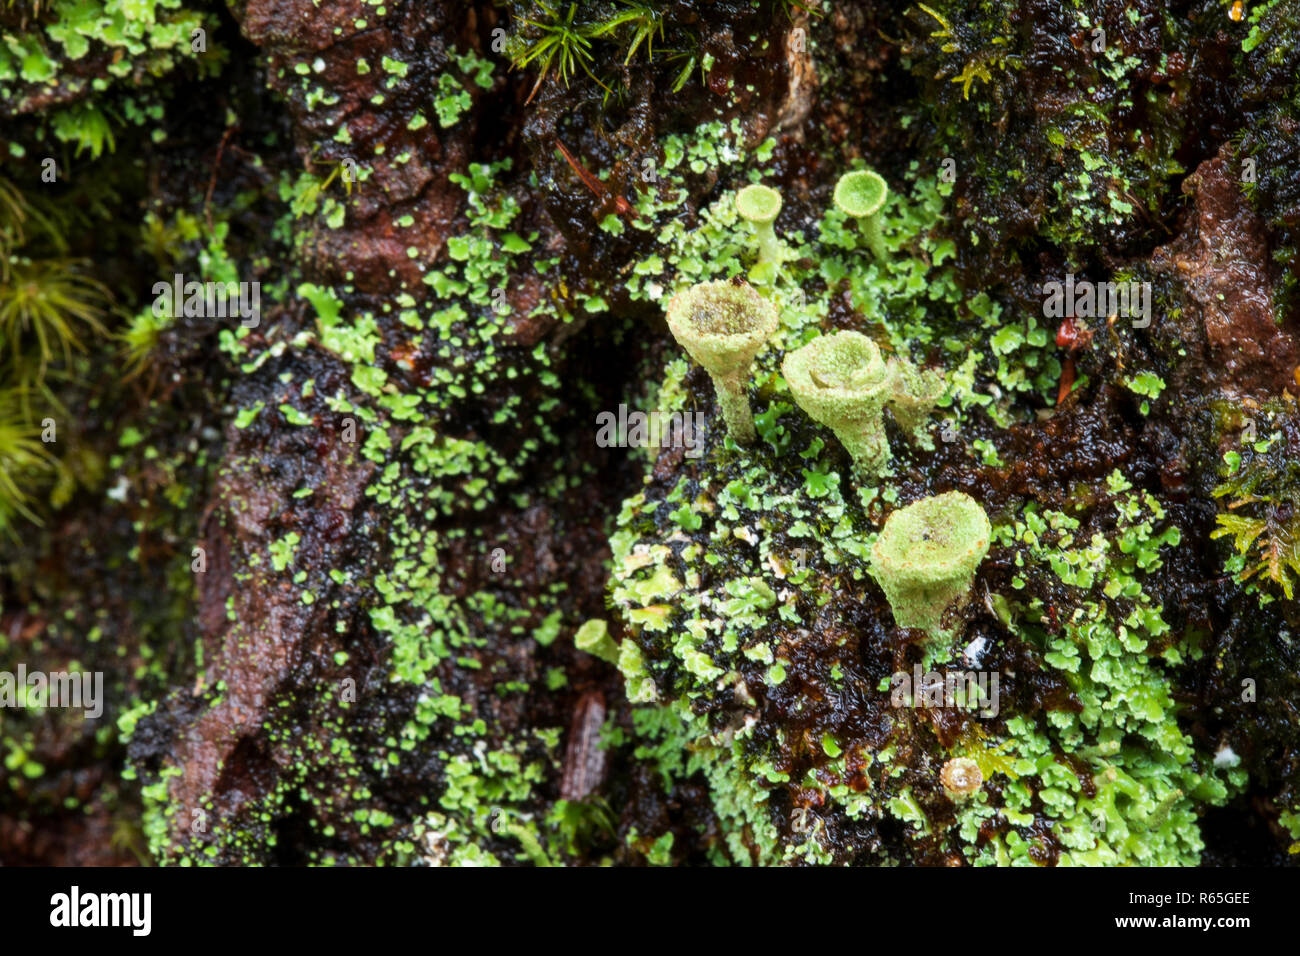 Lichen growing on the bark of a hemlock tree in Halifax, Nova Scotia, Canada. Stock Photo